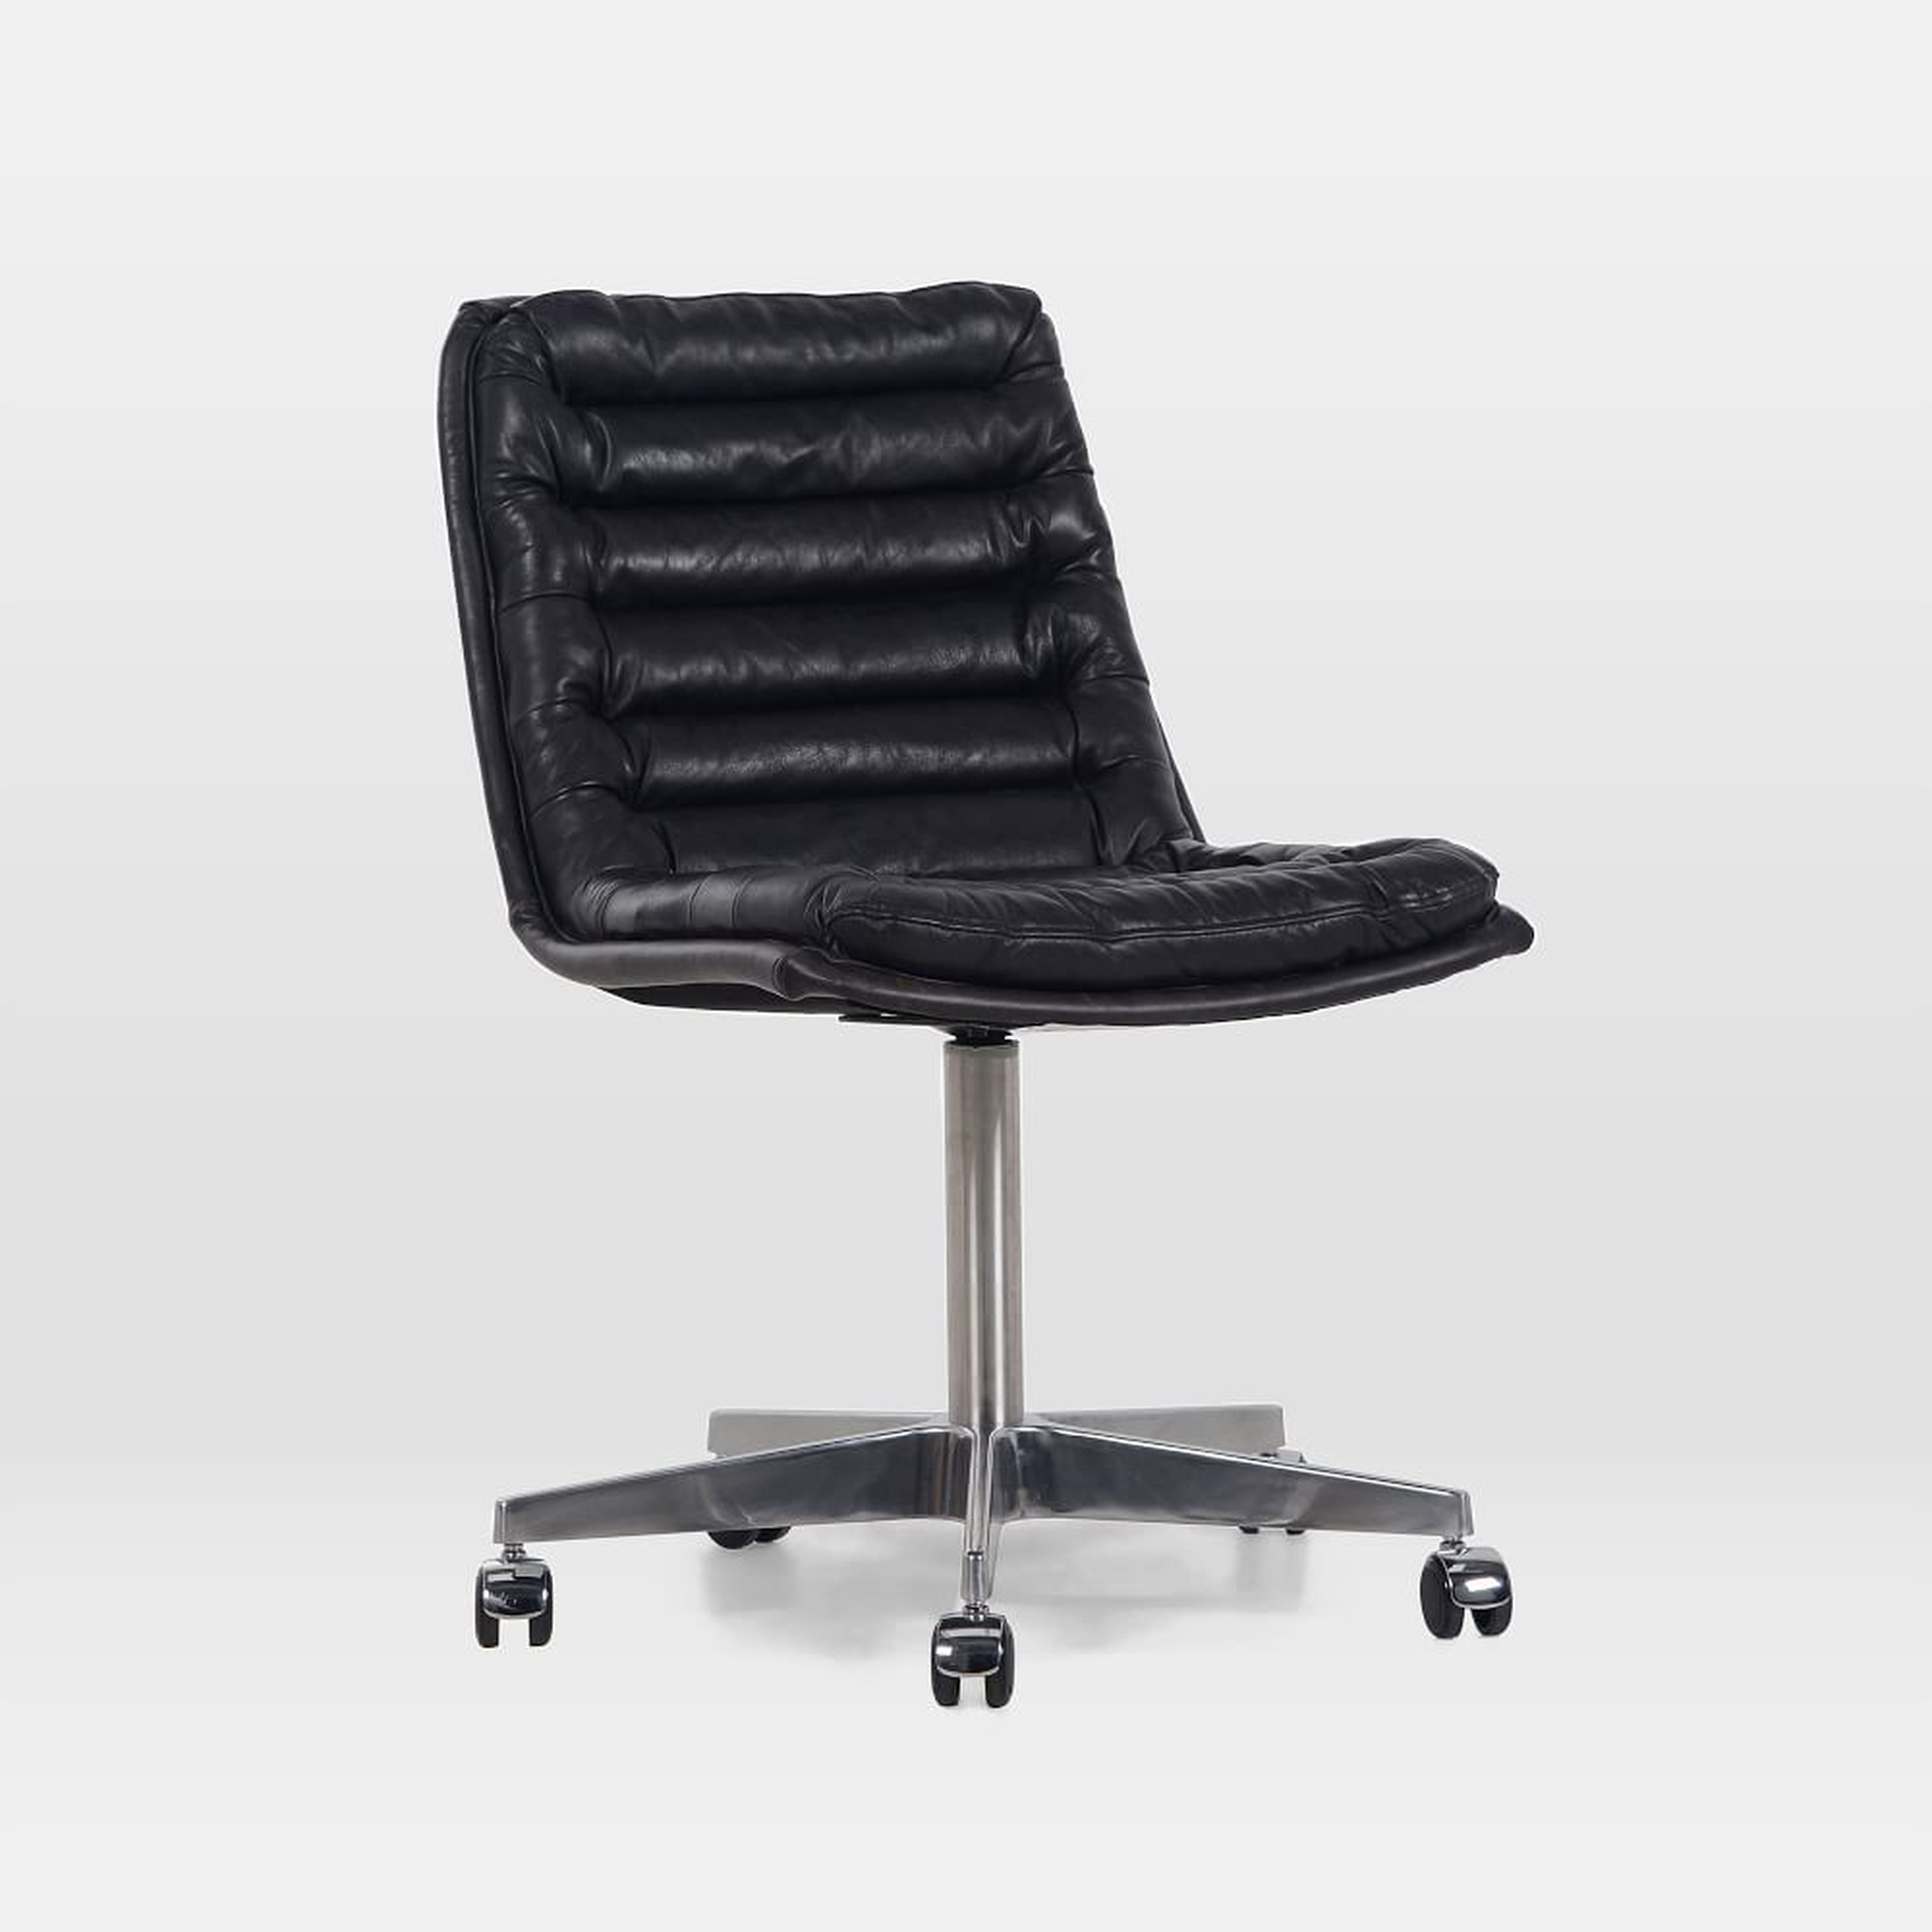 Leather Upholstered Swivel Desk Chair, Black - West Elm